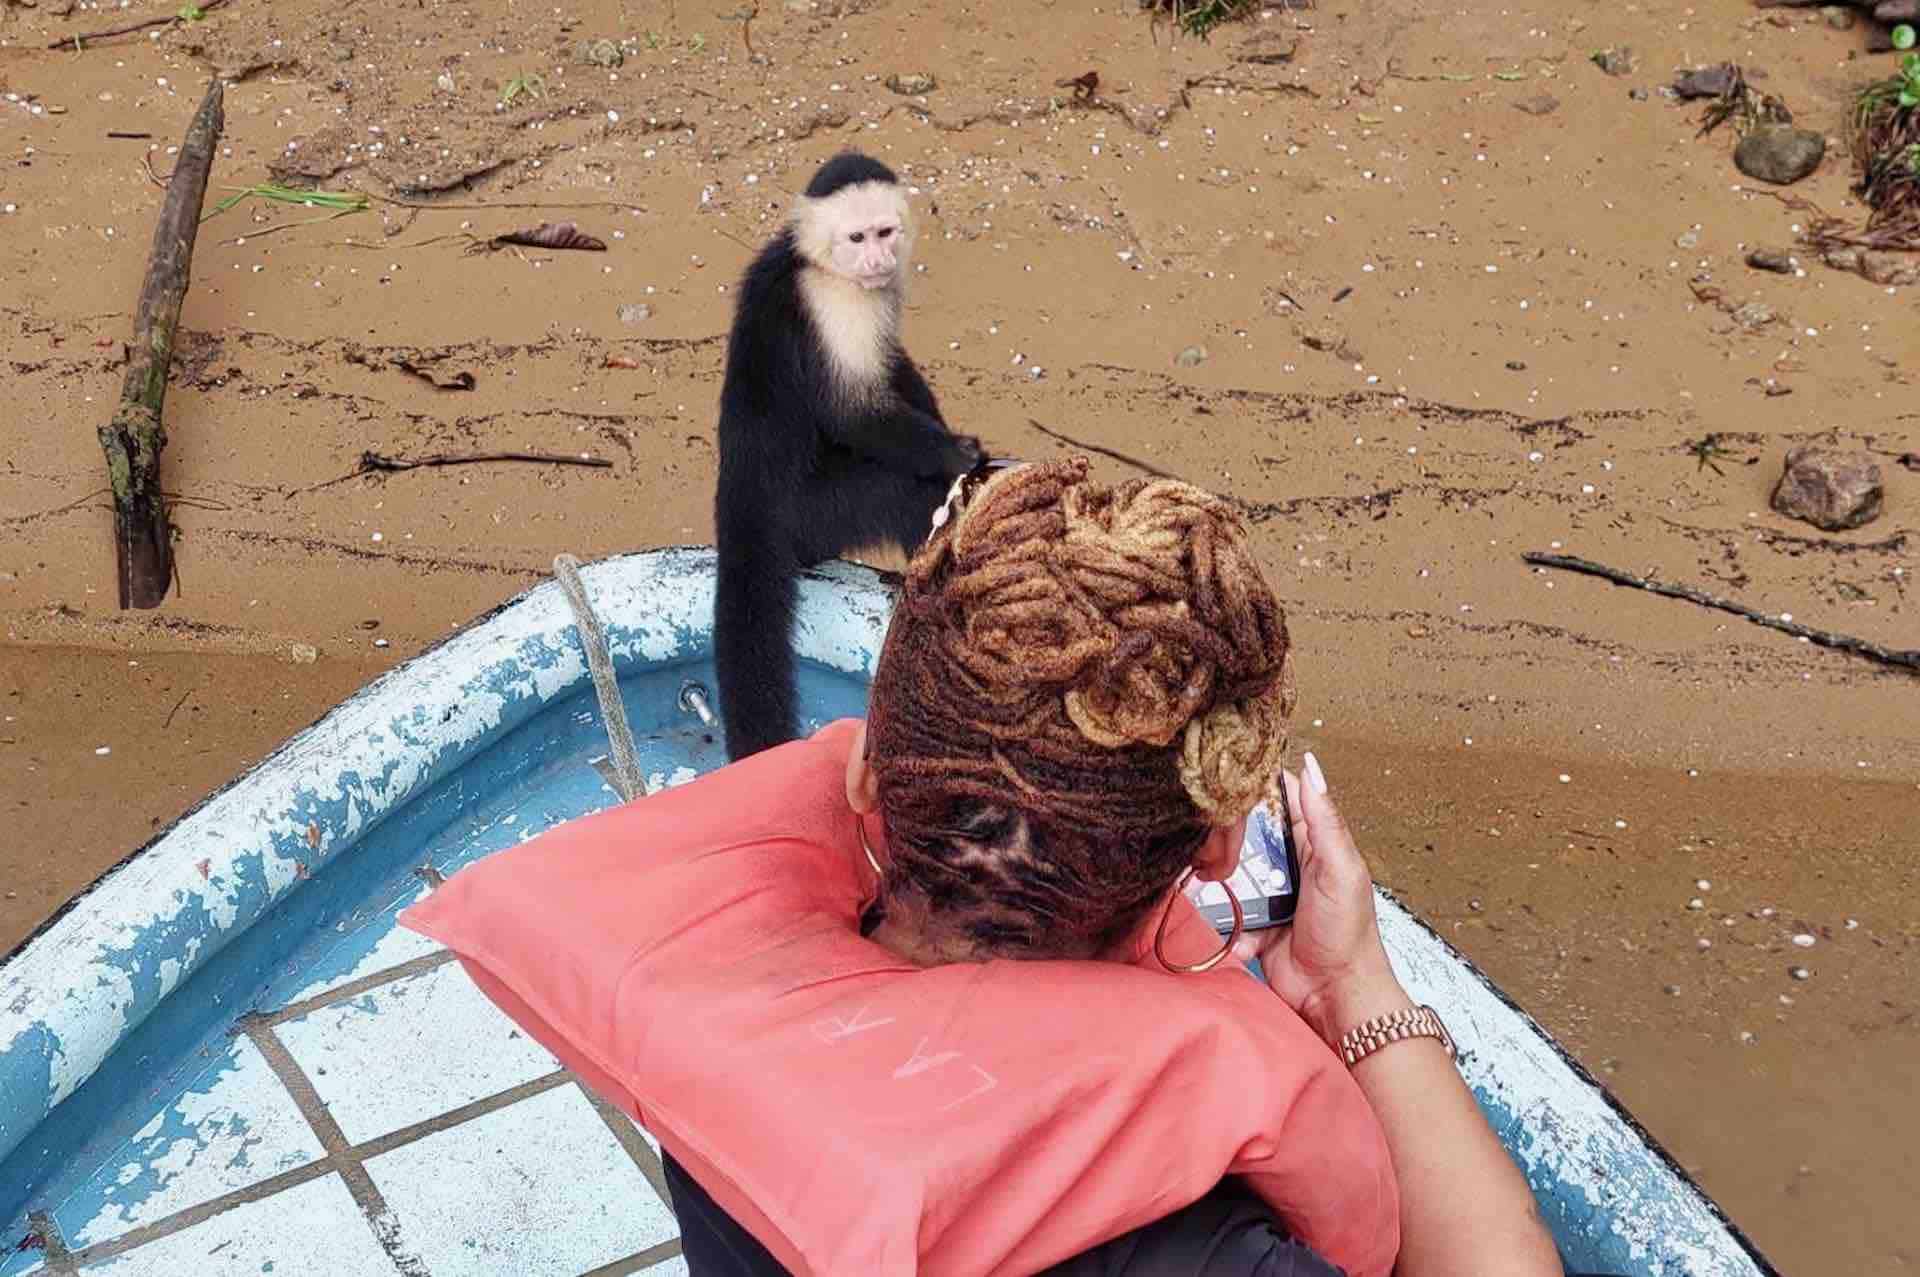 monkey island panama sloth sanctuary tour monkey looking at woman